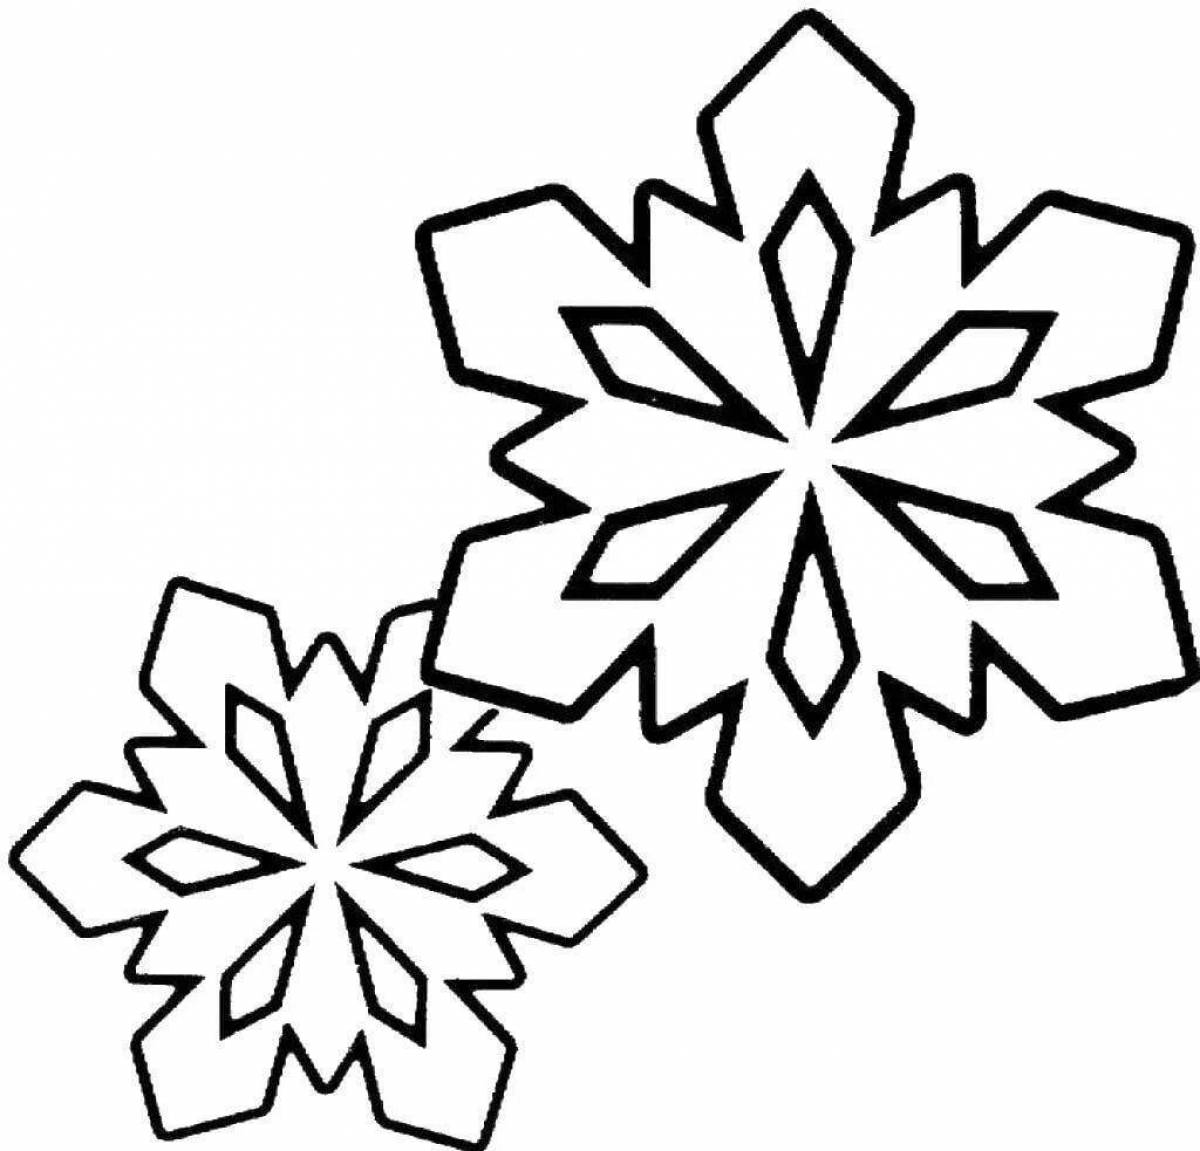 Coloring mystical snowflake